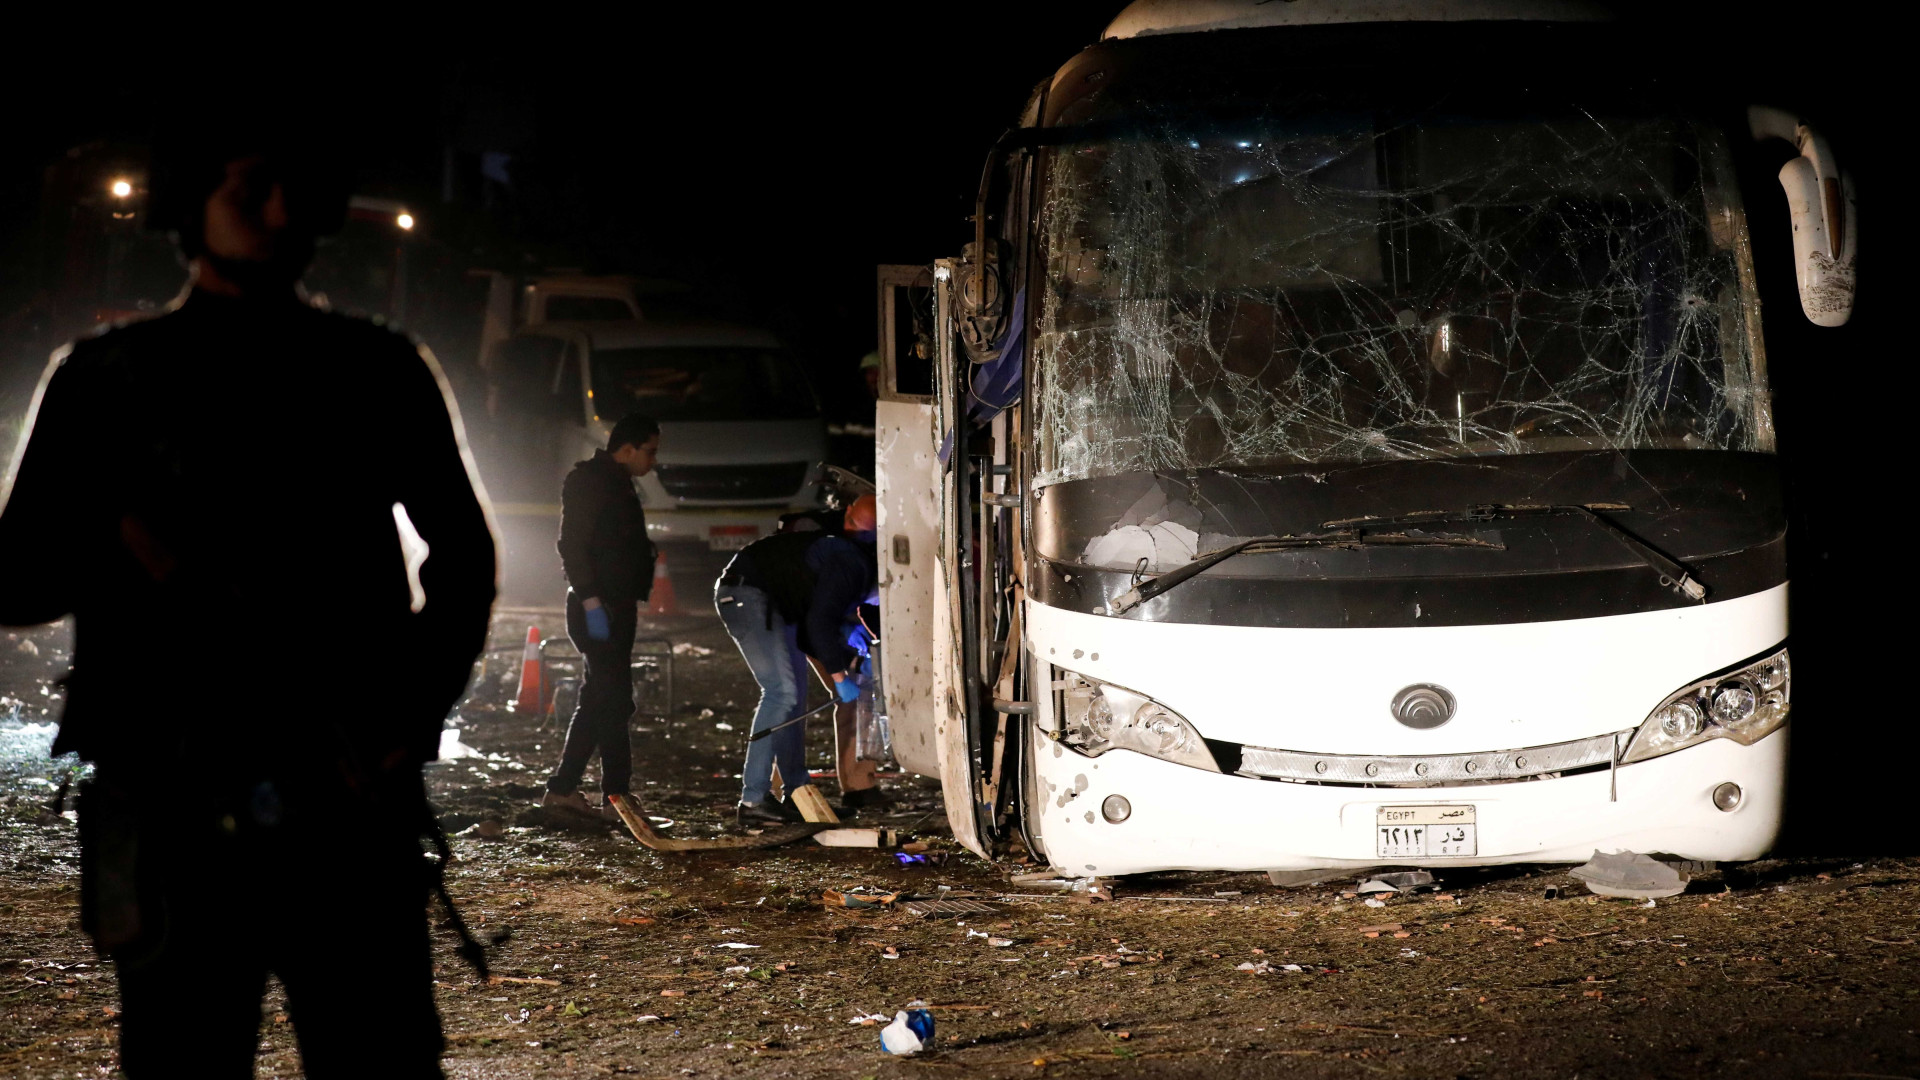 Egito mata 40 suspeitos um dia após bombardeio de ônibus